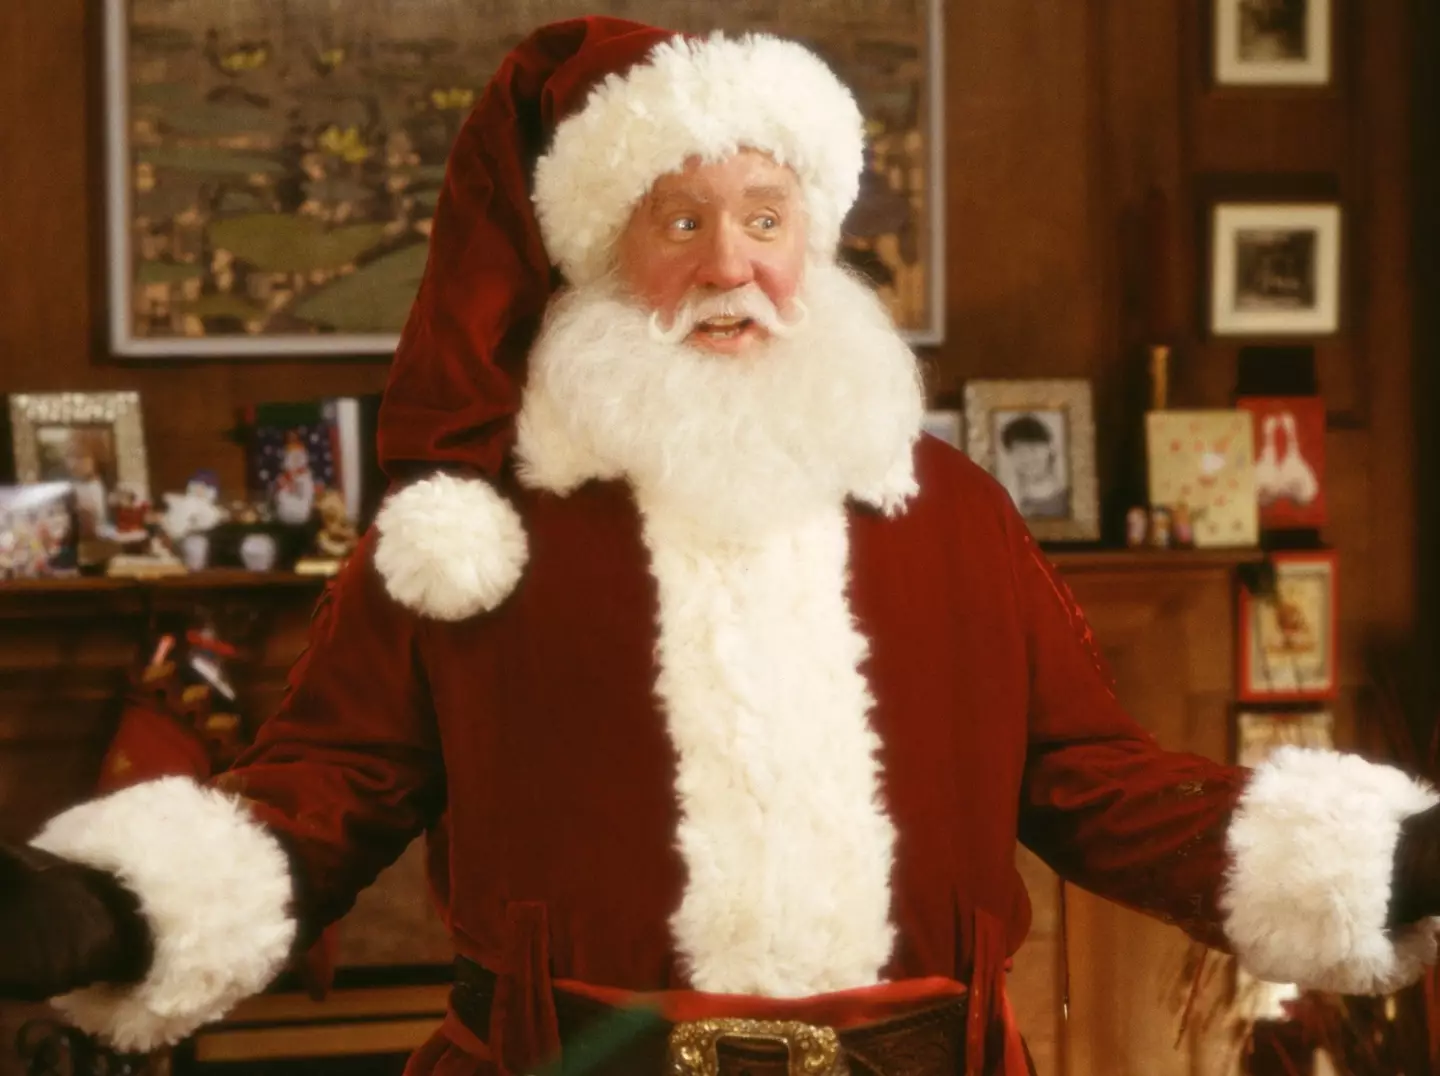 Tim Allen has been Santa Clause since 1994.